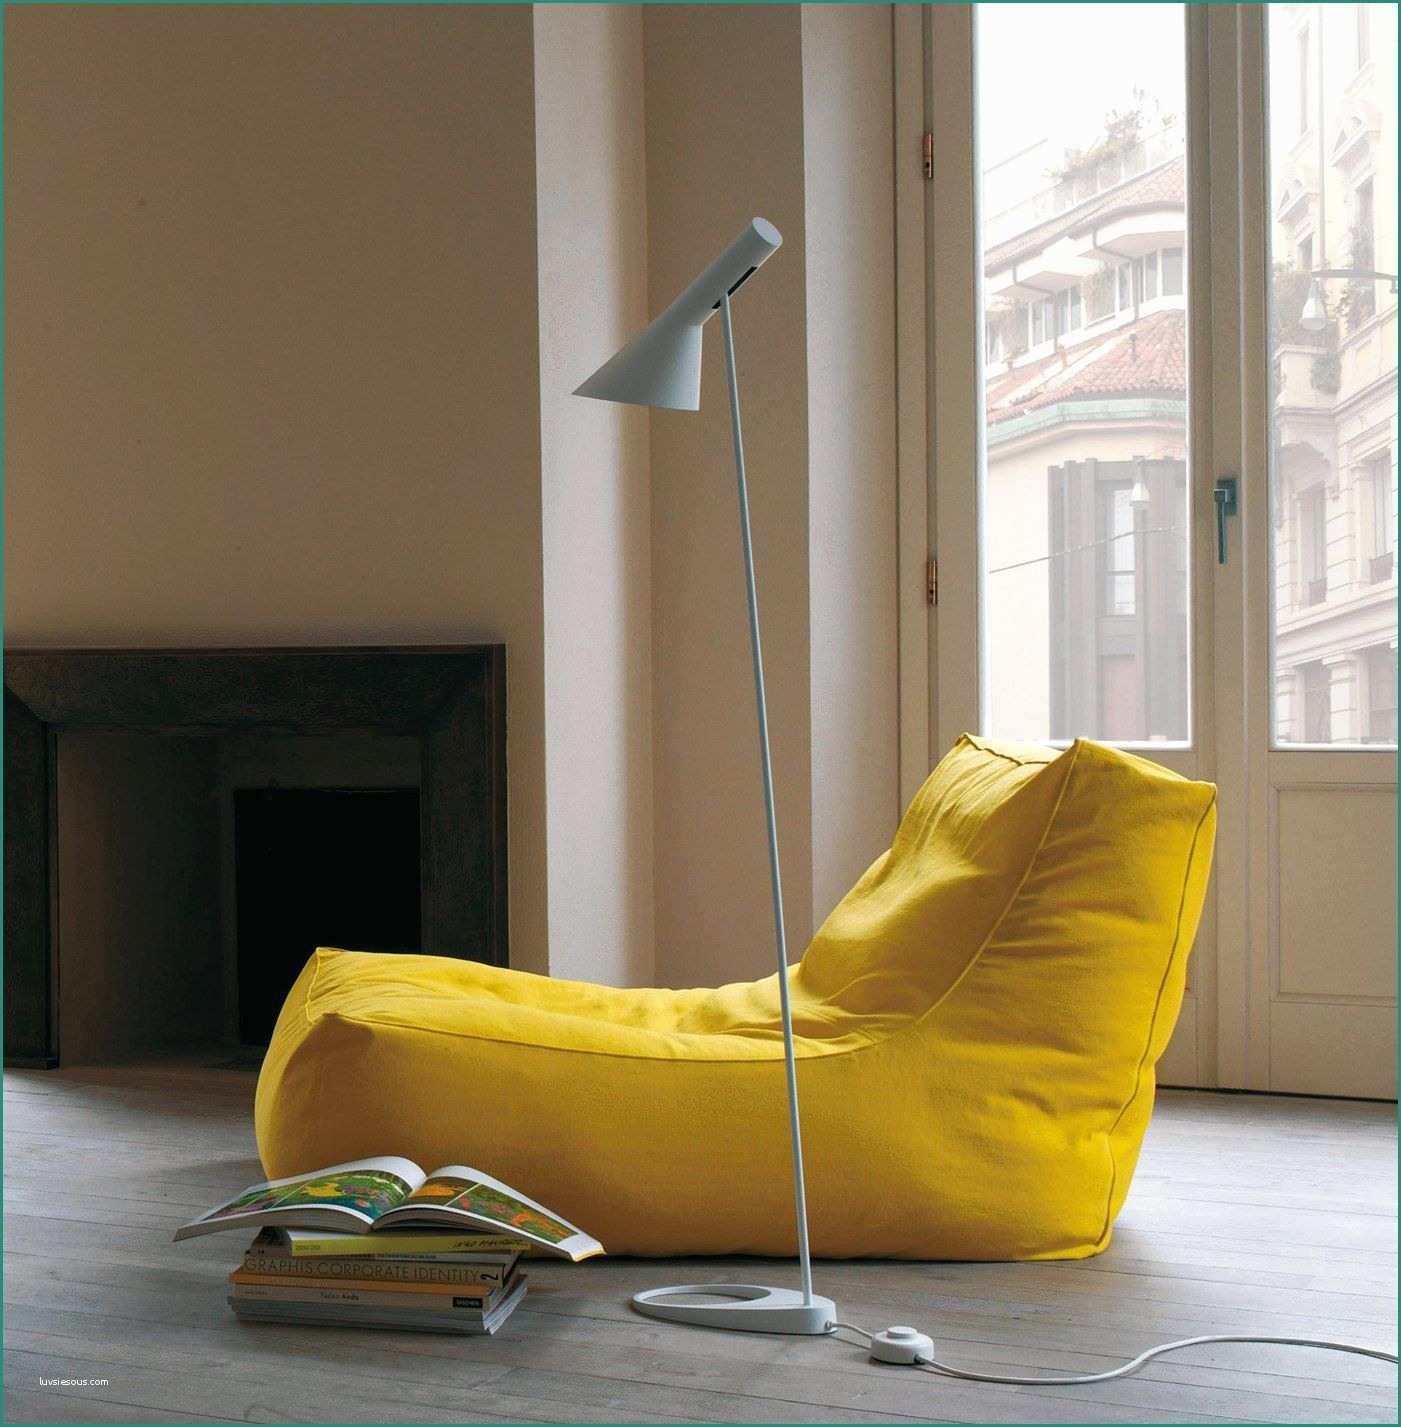 Chaise Longue Divano E Yellow Couch Casa Pinterest